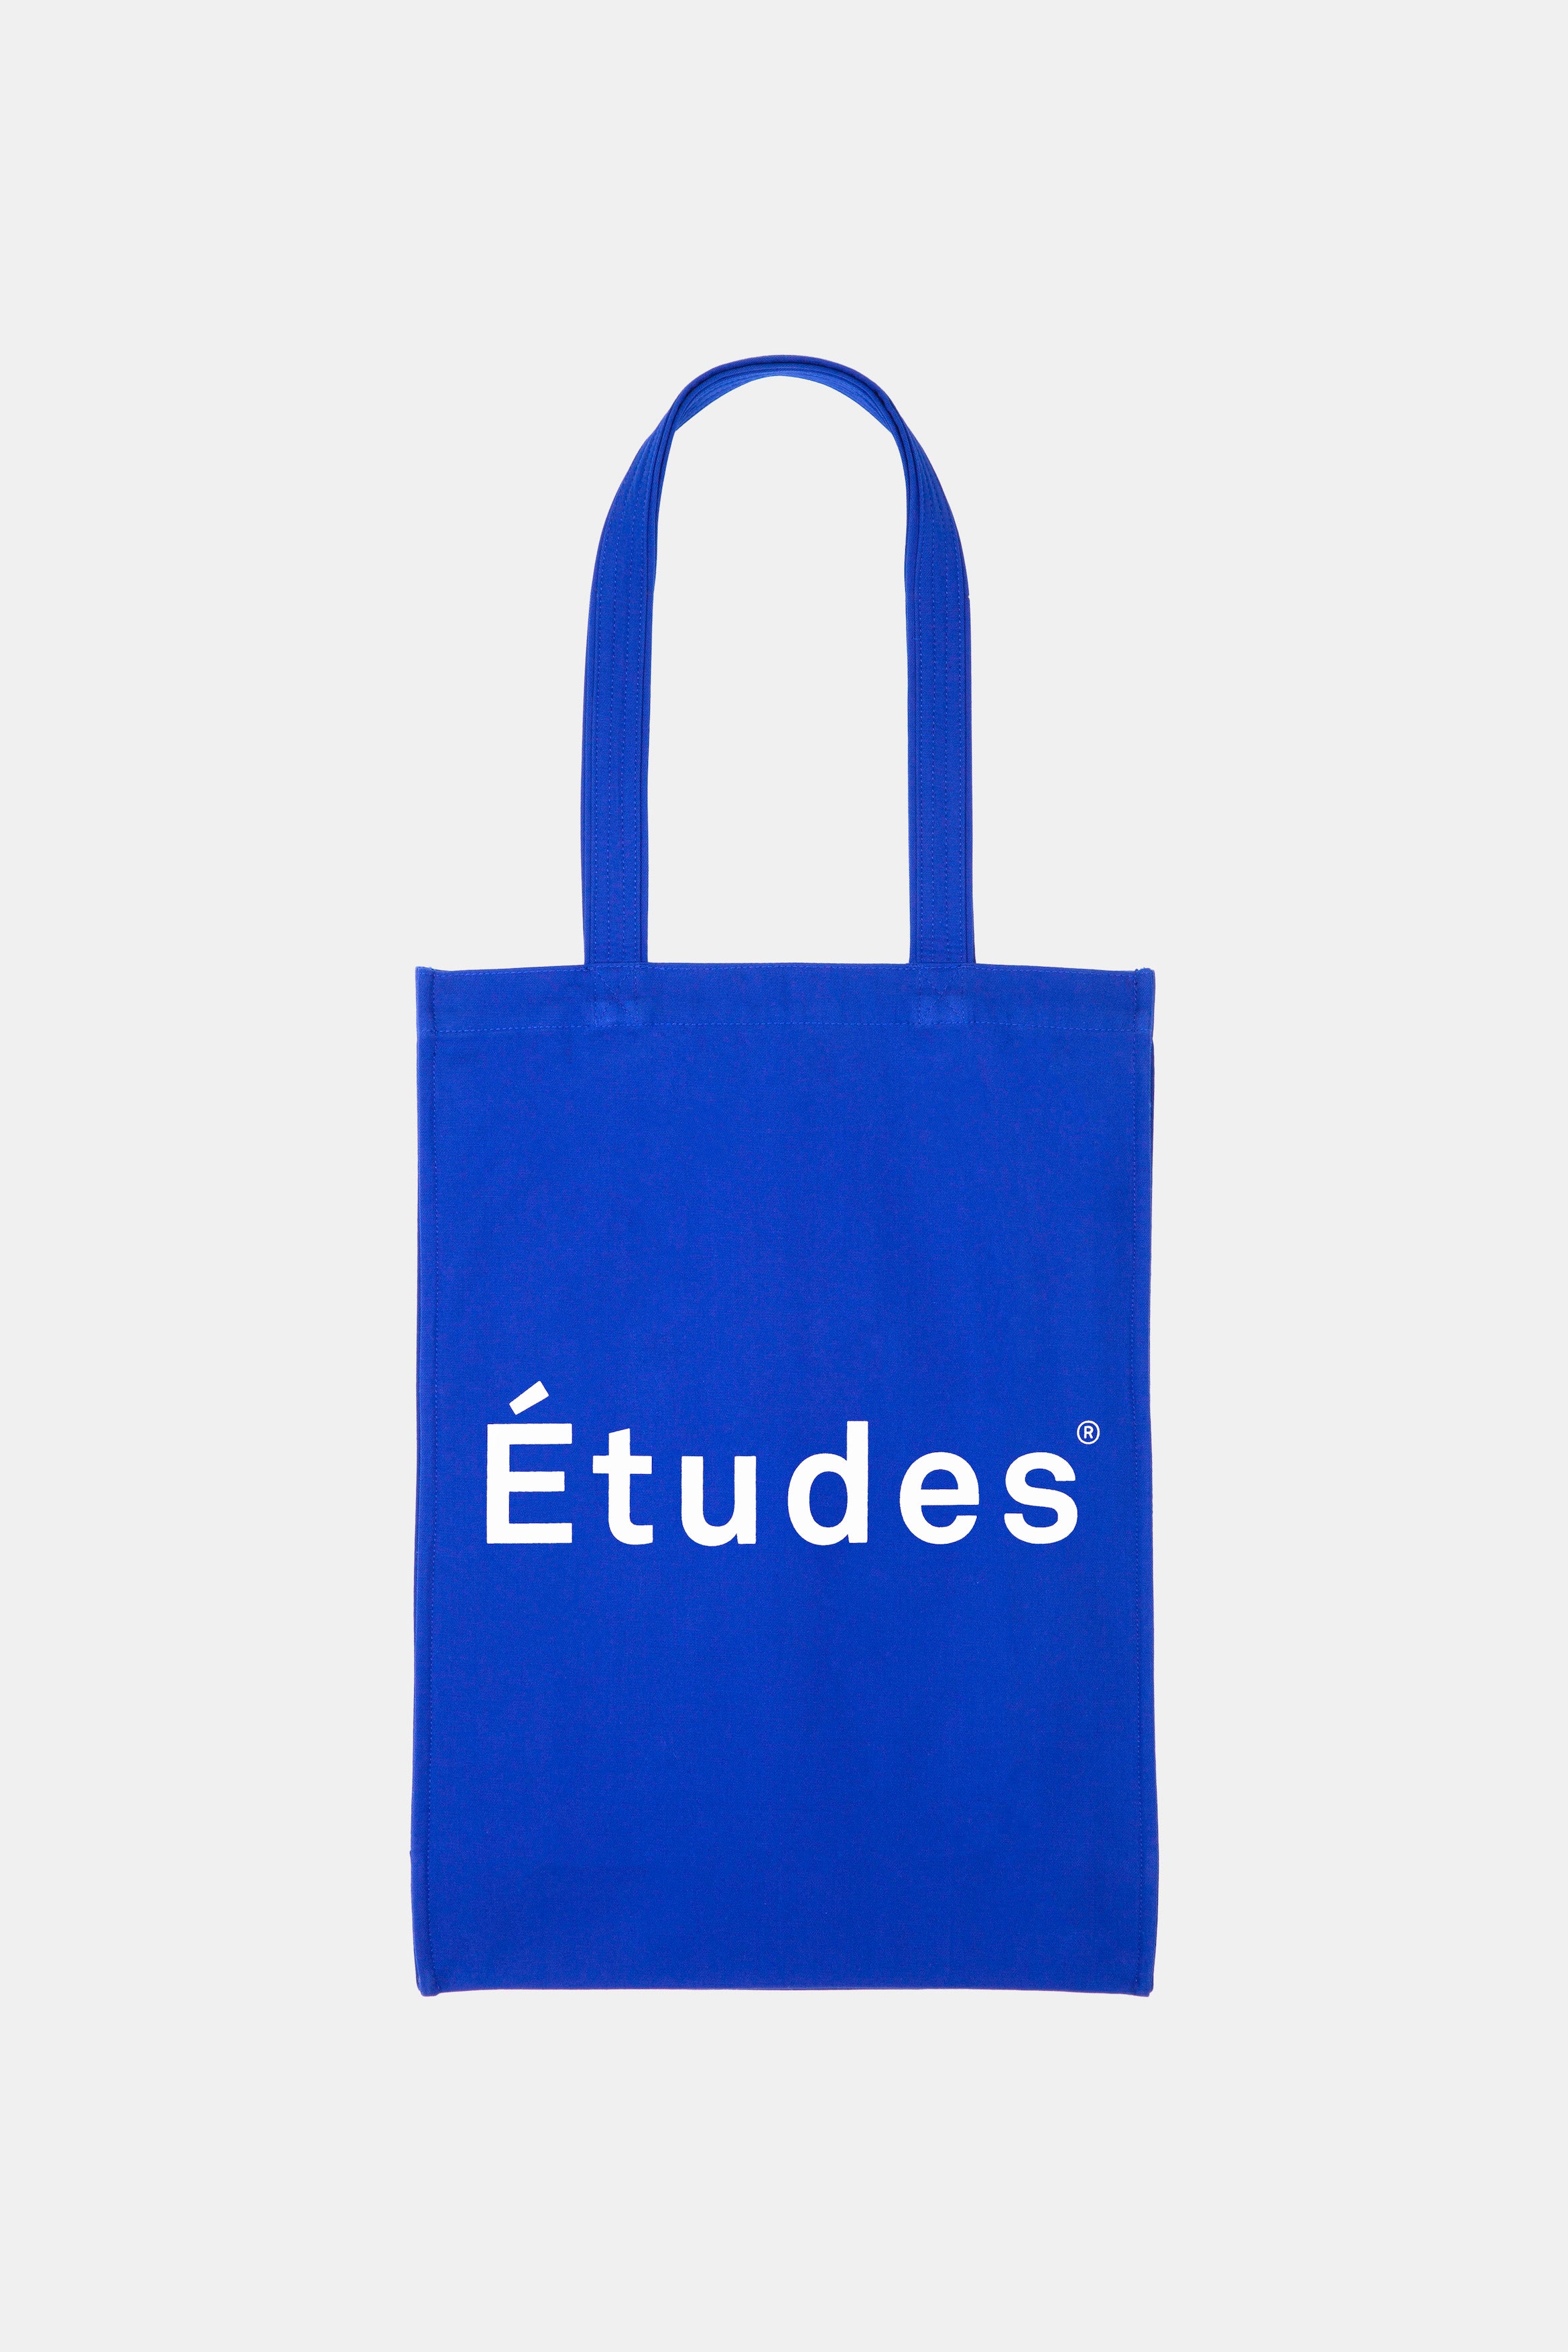 Études NOVEMBER ETUDES BLUE bag 1